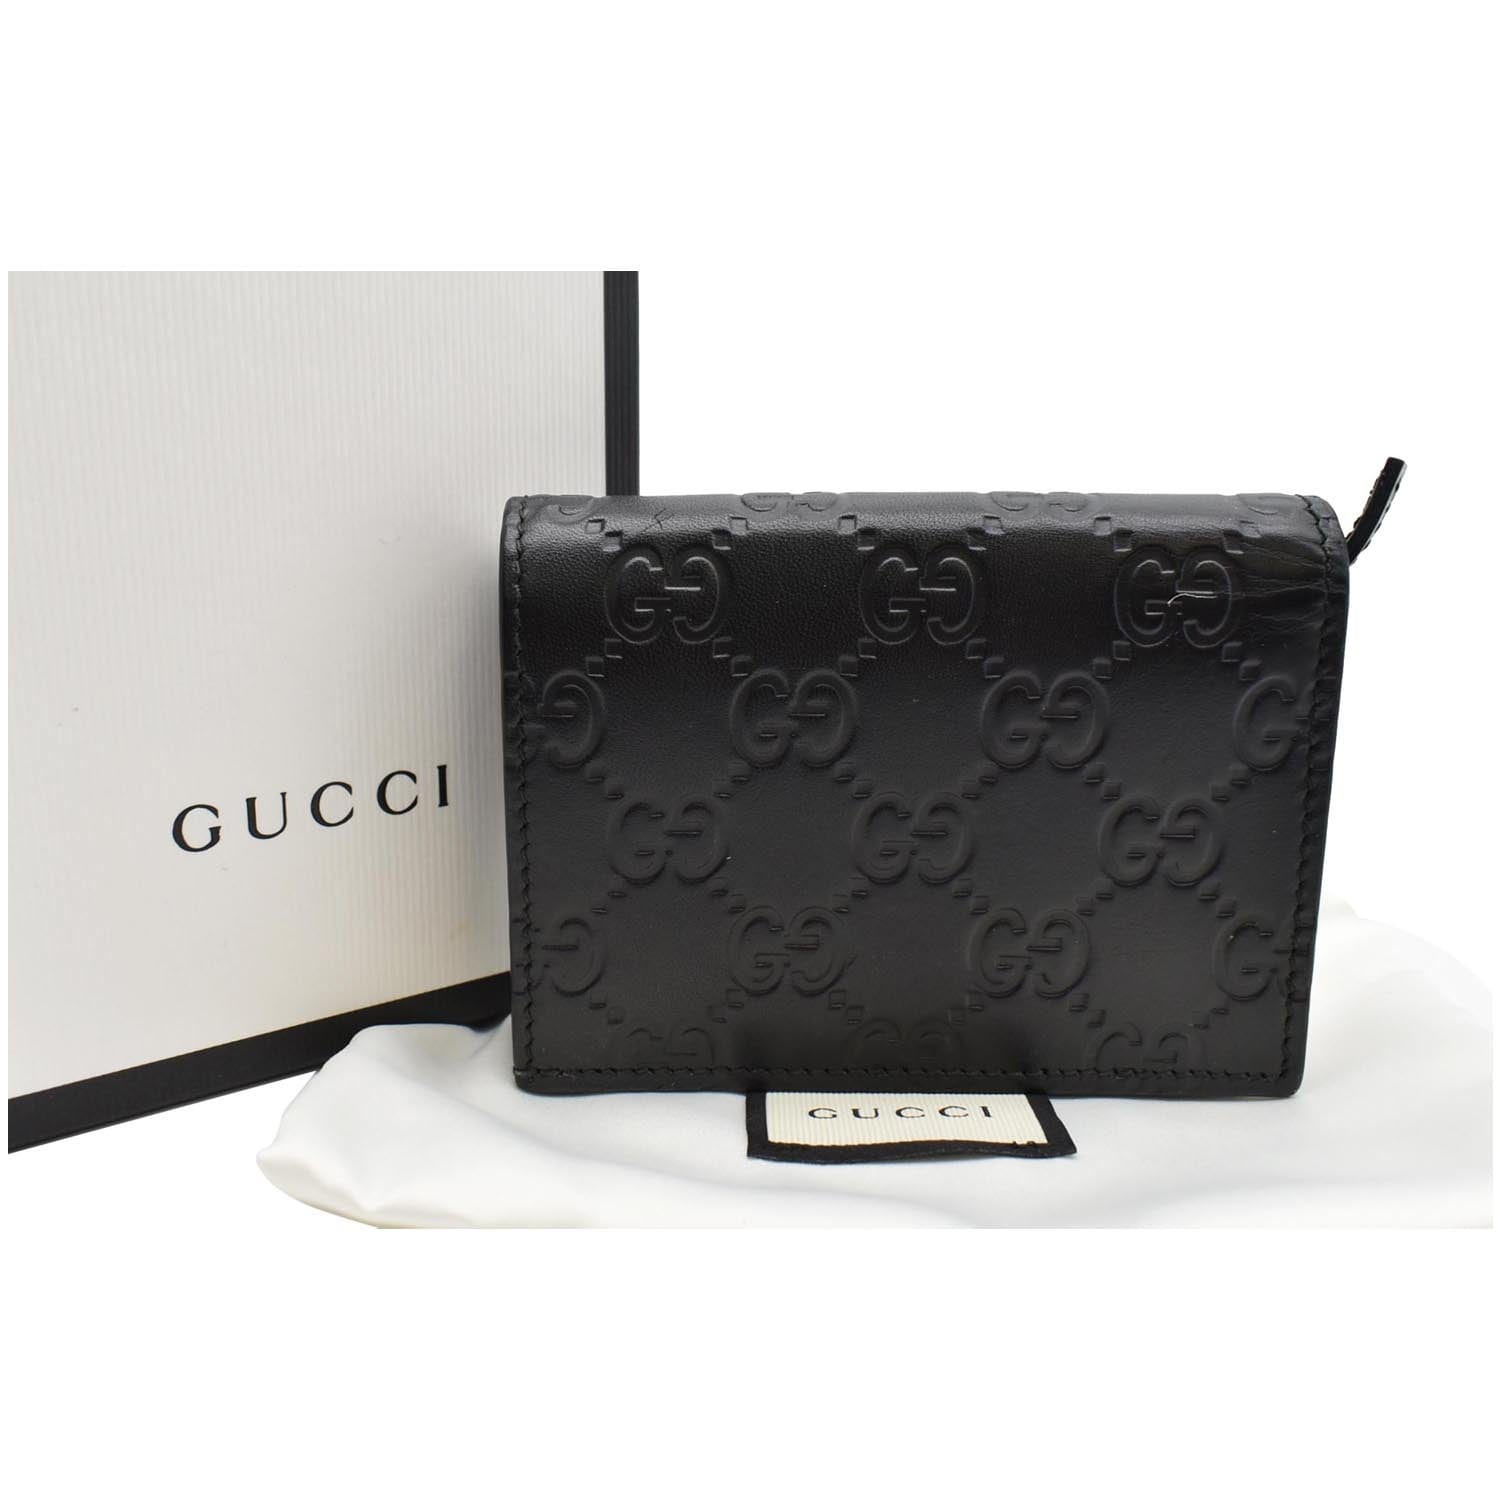 Gucci Signature card case